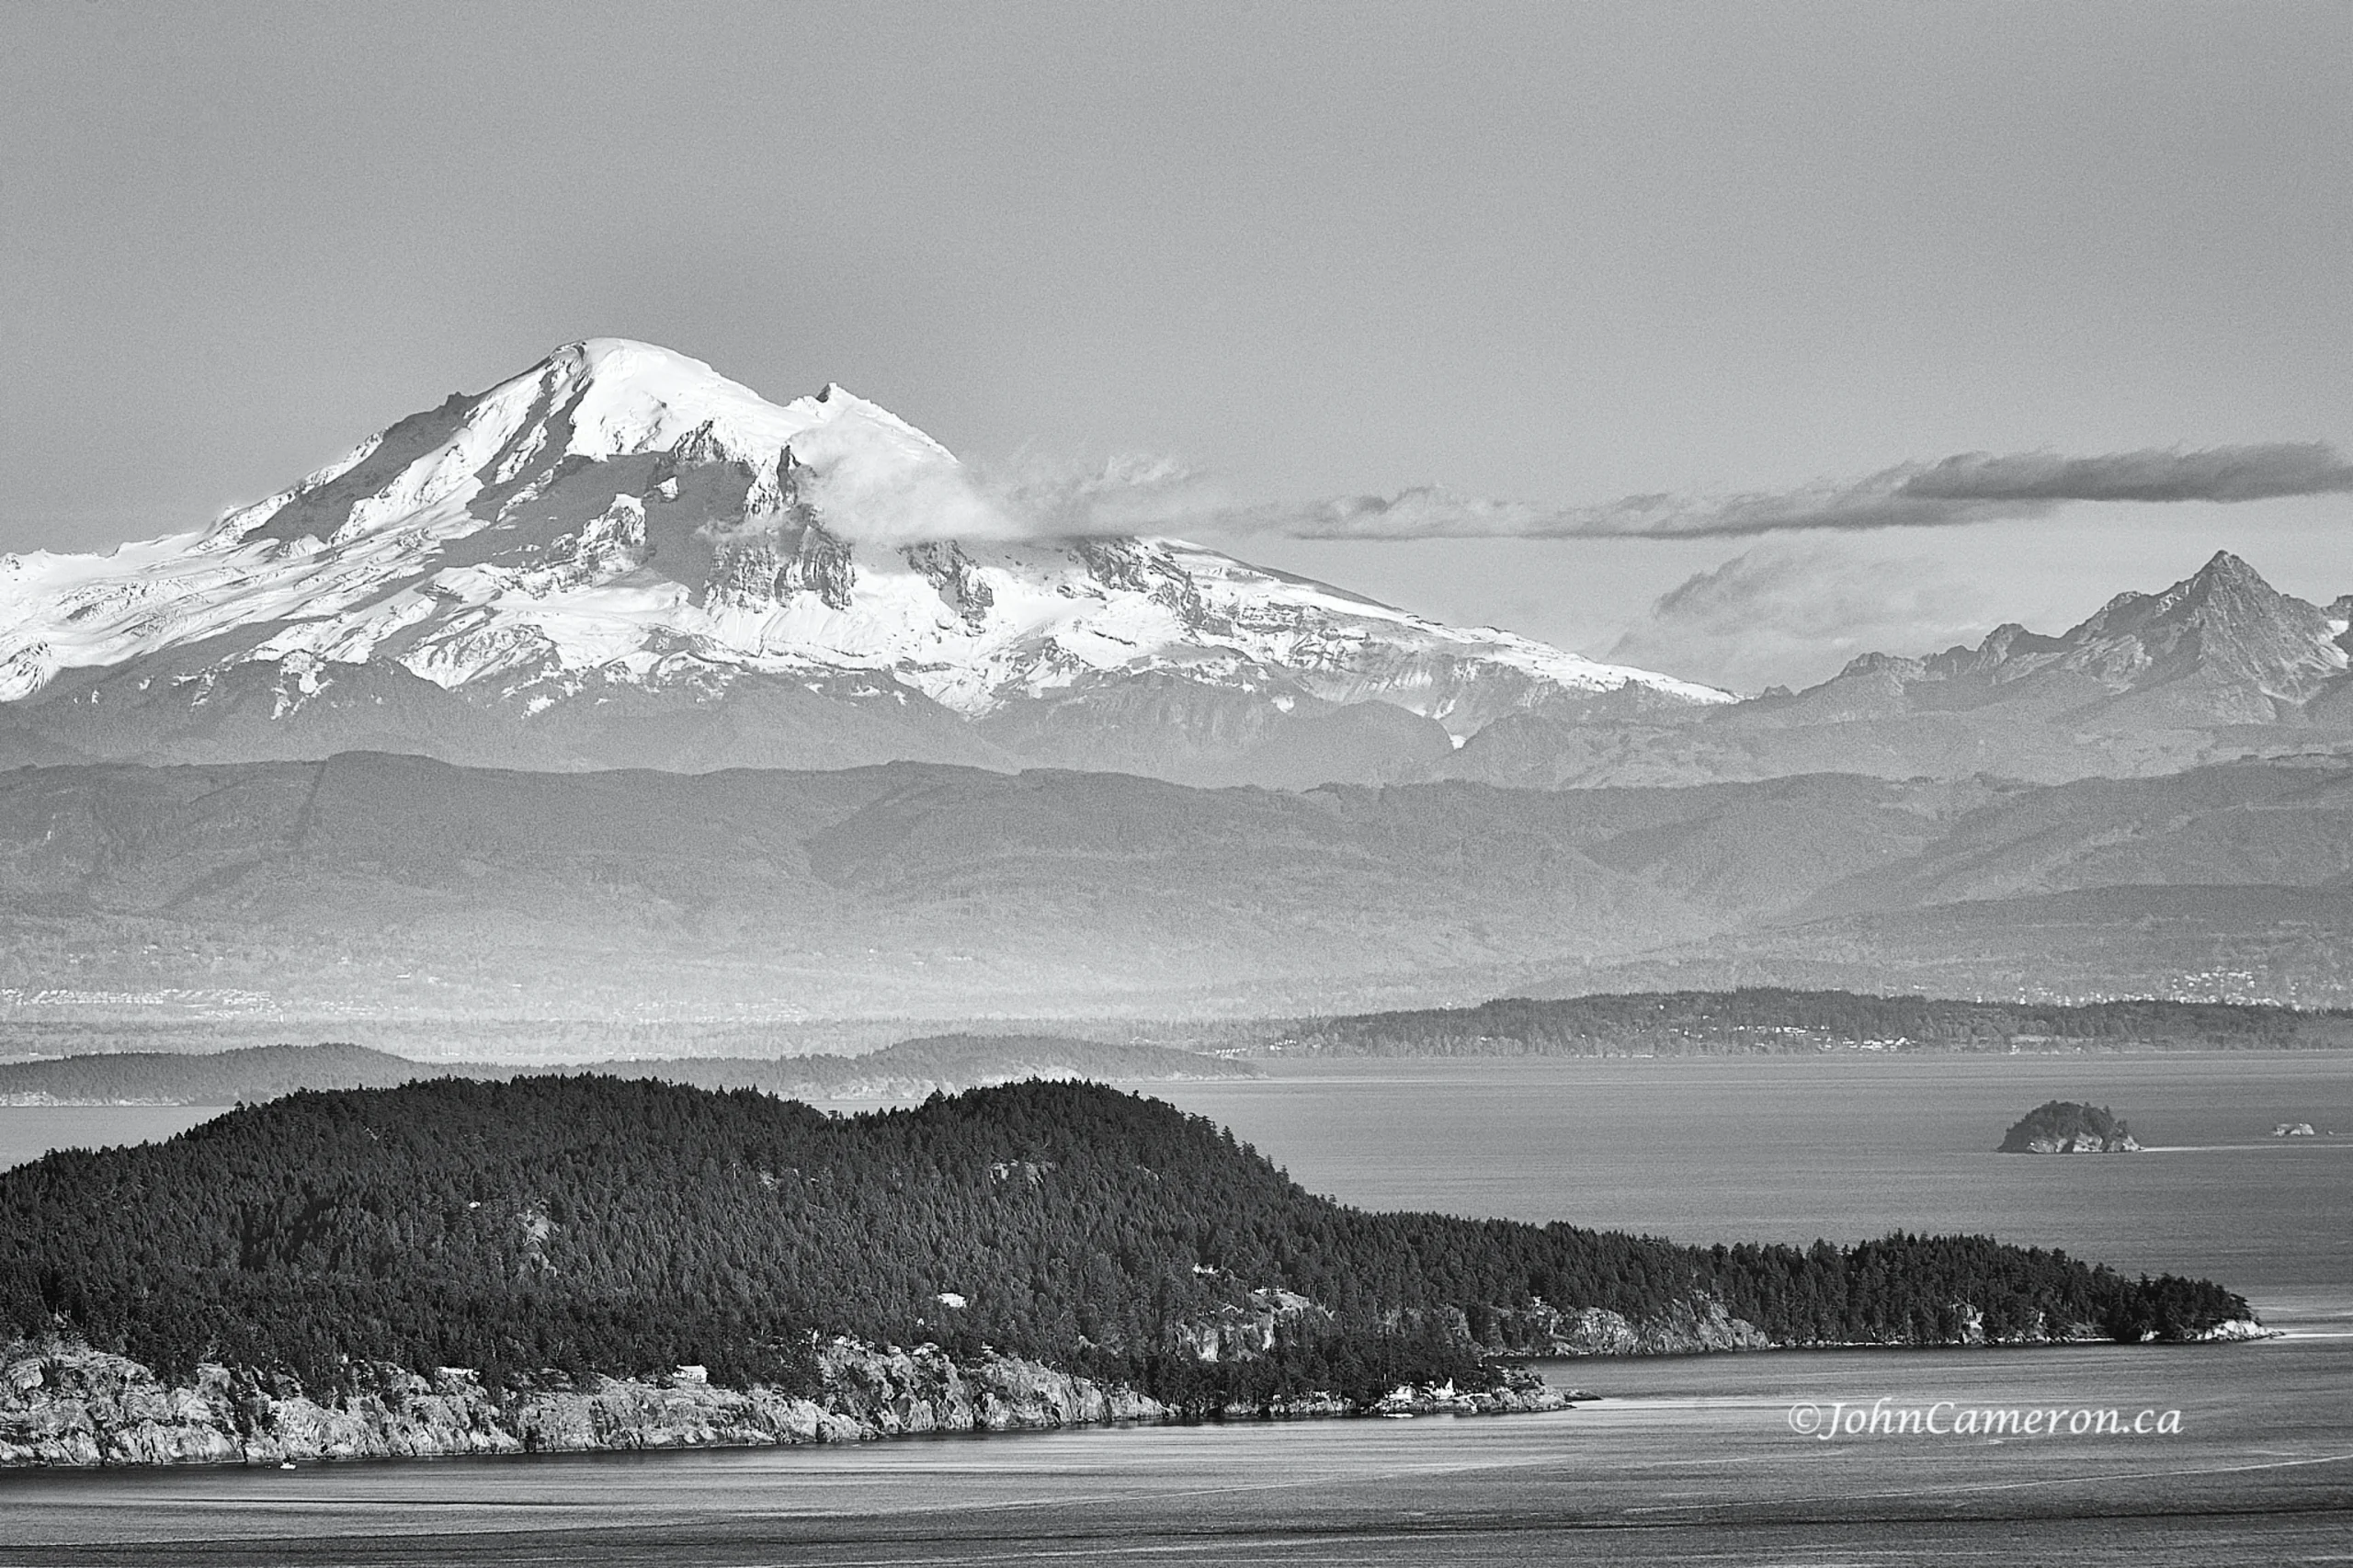 Mount Baker from Salt Spring Island, BC ©johncameron.ca